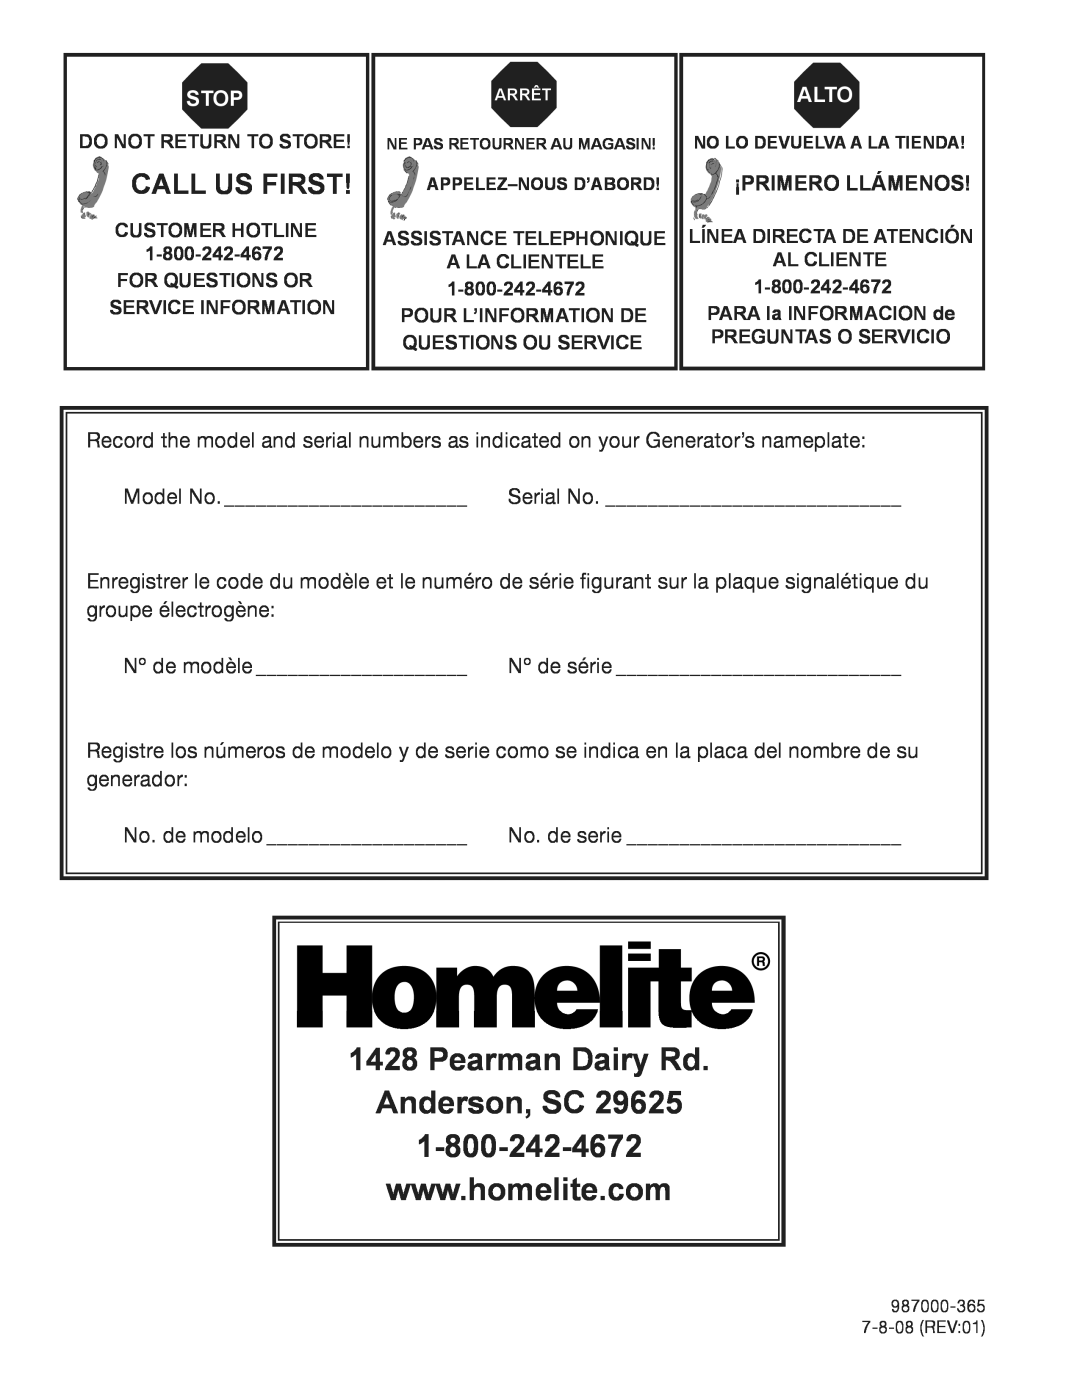 Homelite HG3510 manuel dutilisation Pearman Dairy Rd Anderson, SC, Call Us First, ¡Primero Llámenos, Alto, Stop 